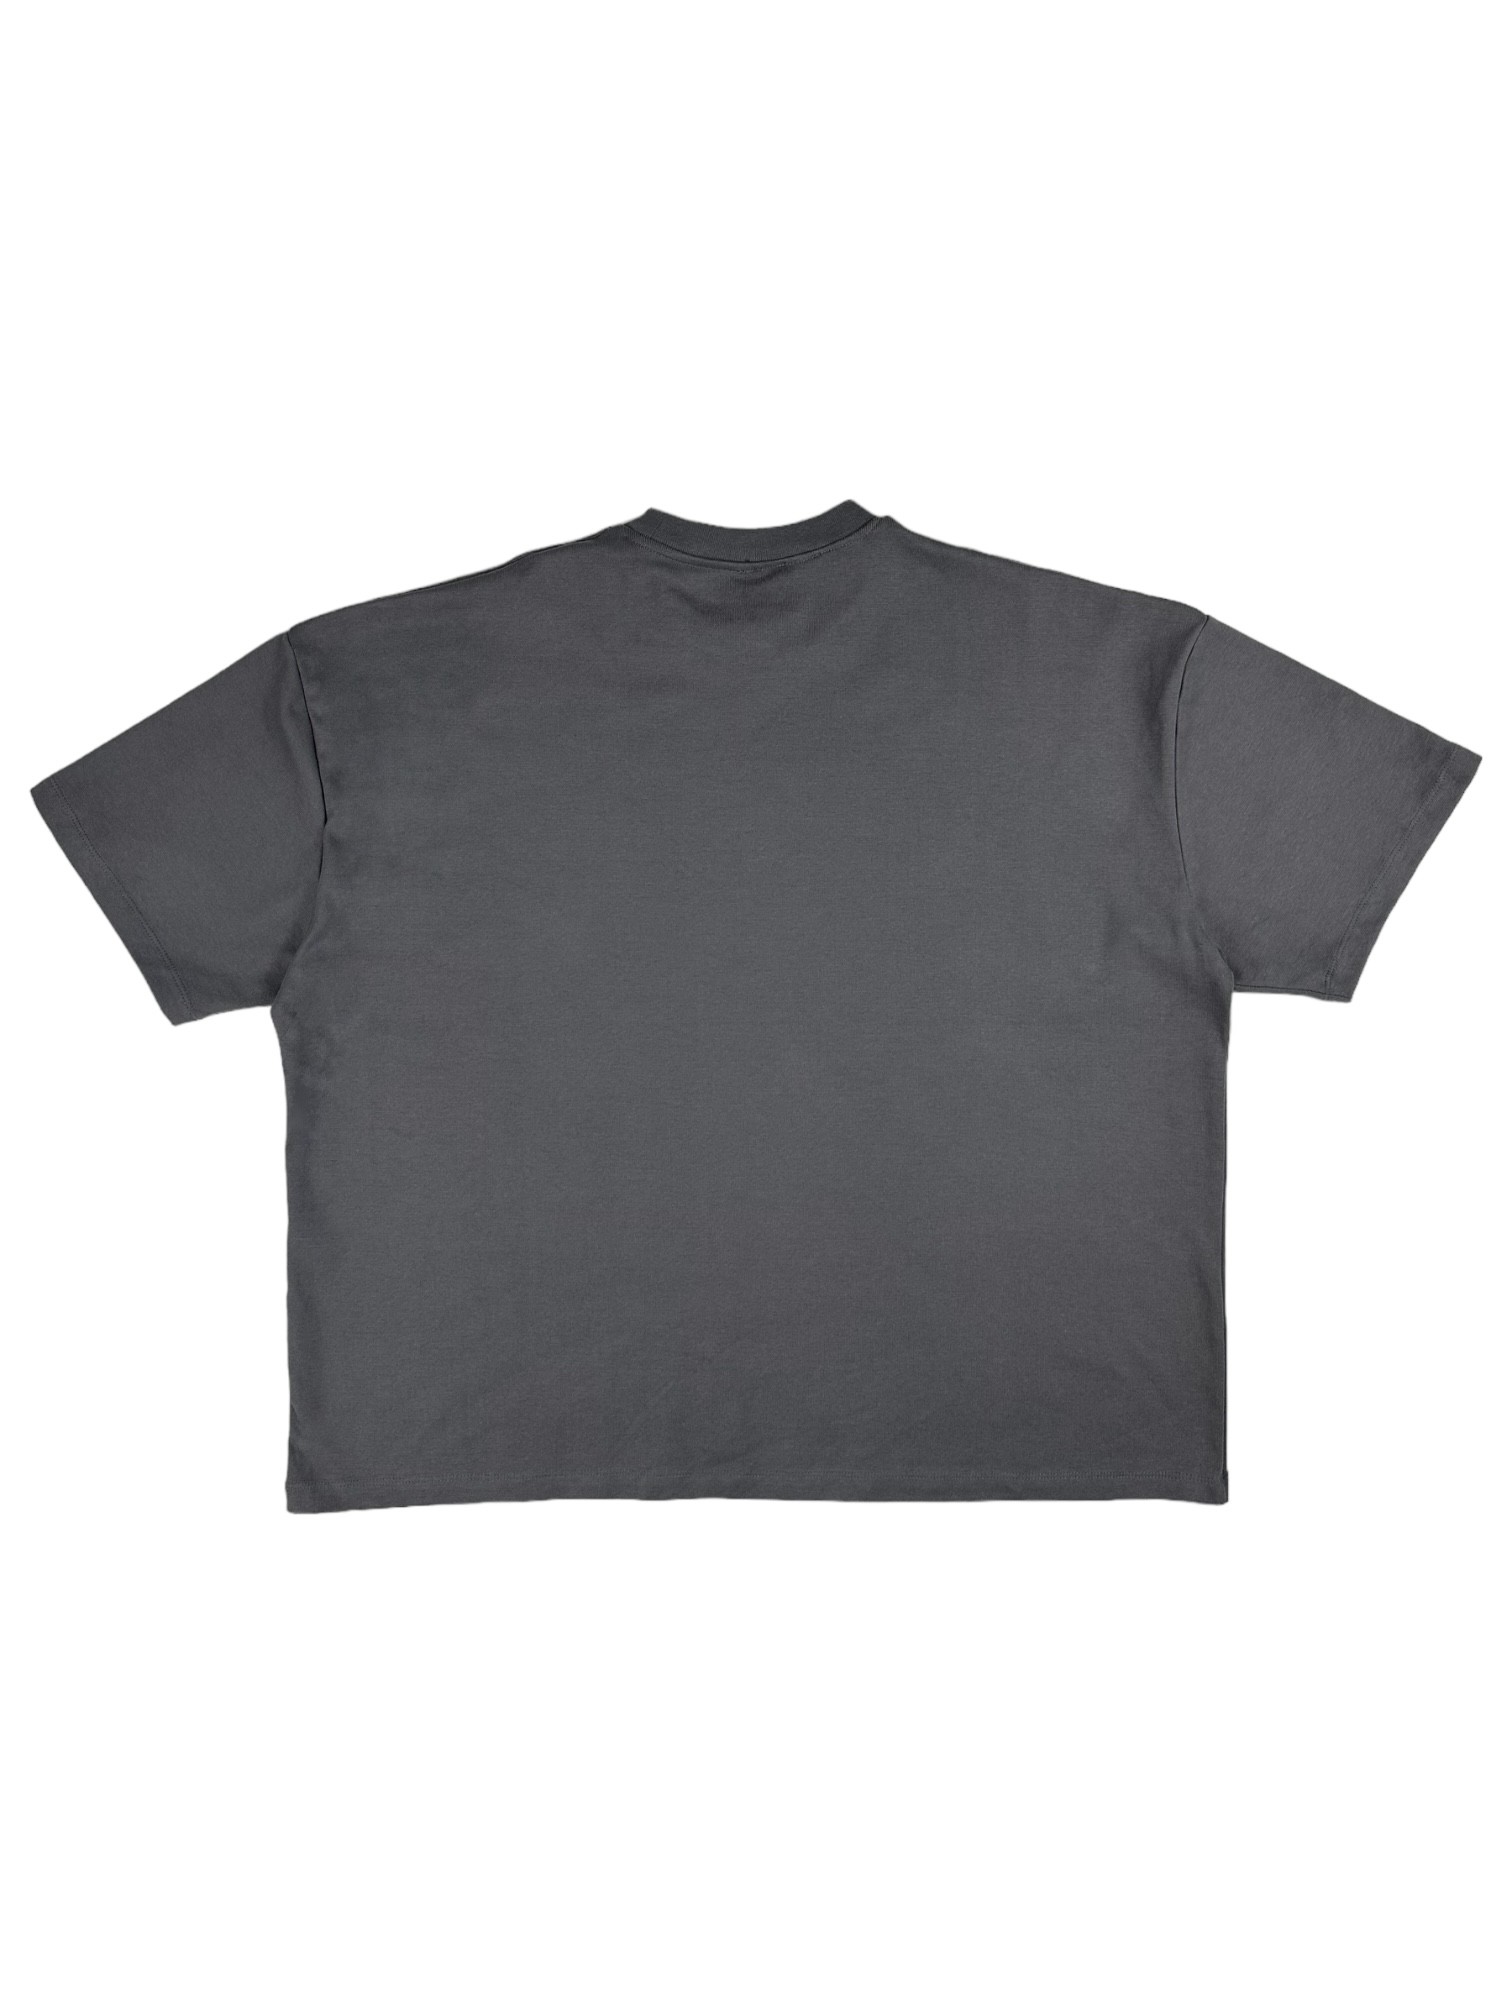 Tudo Passa Oversize T Shirt (LMT81)